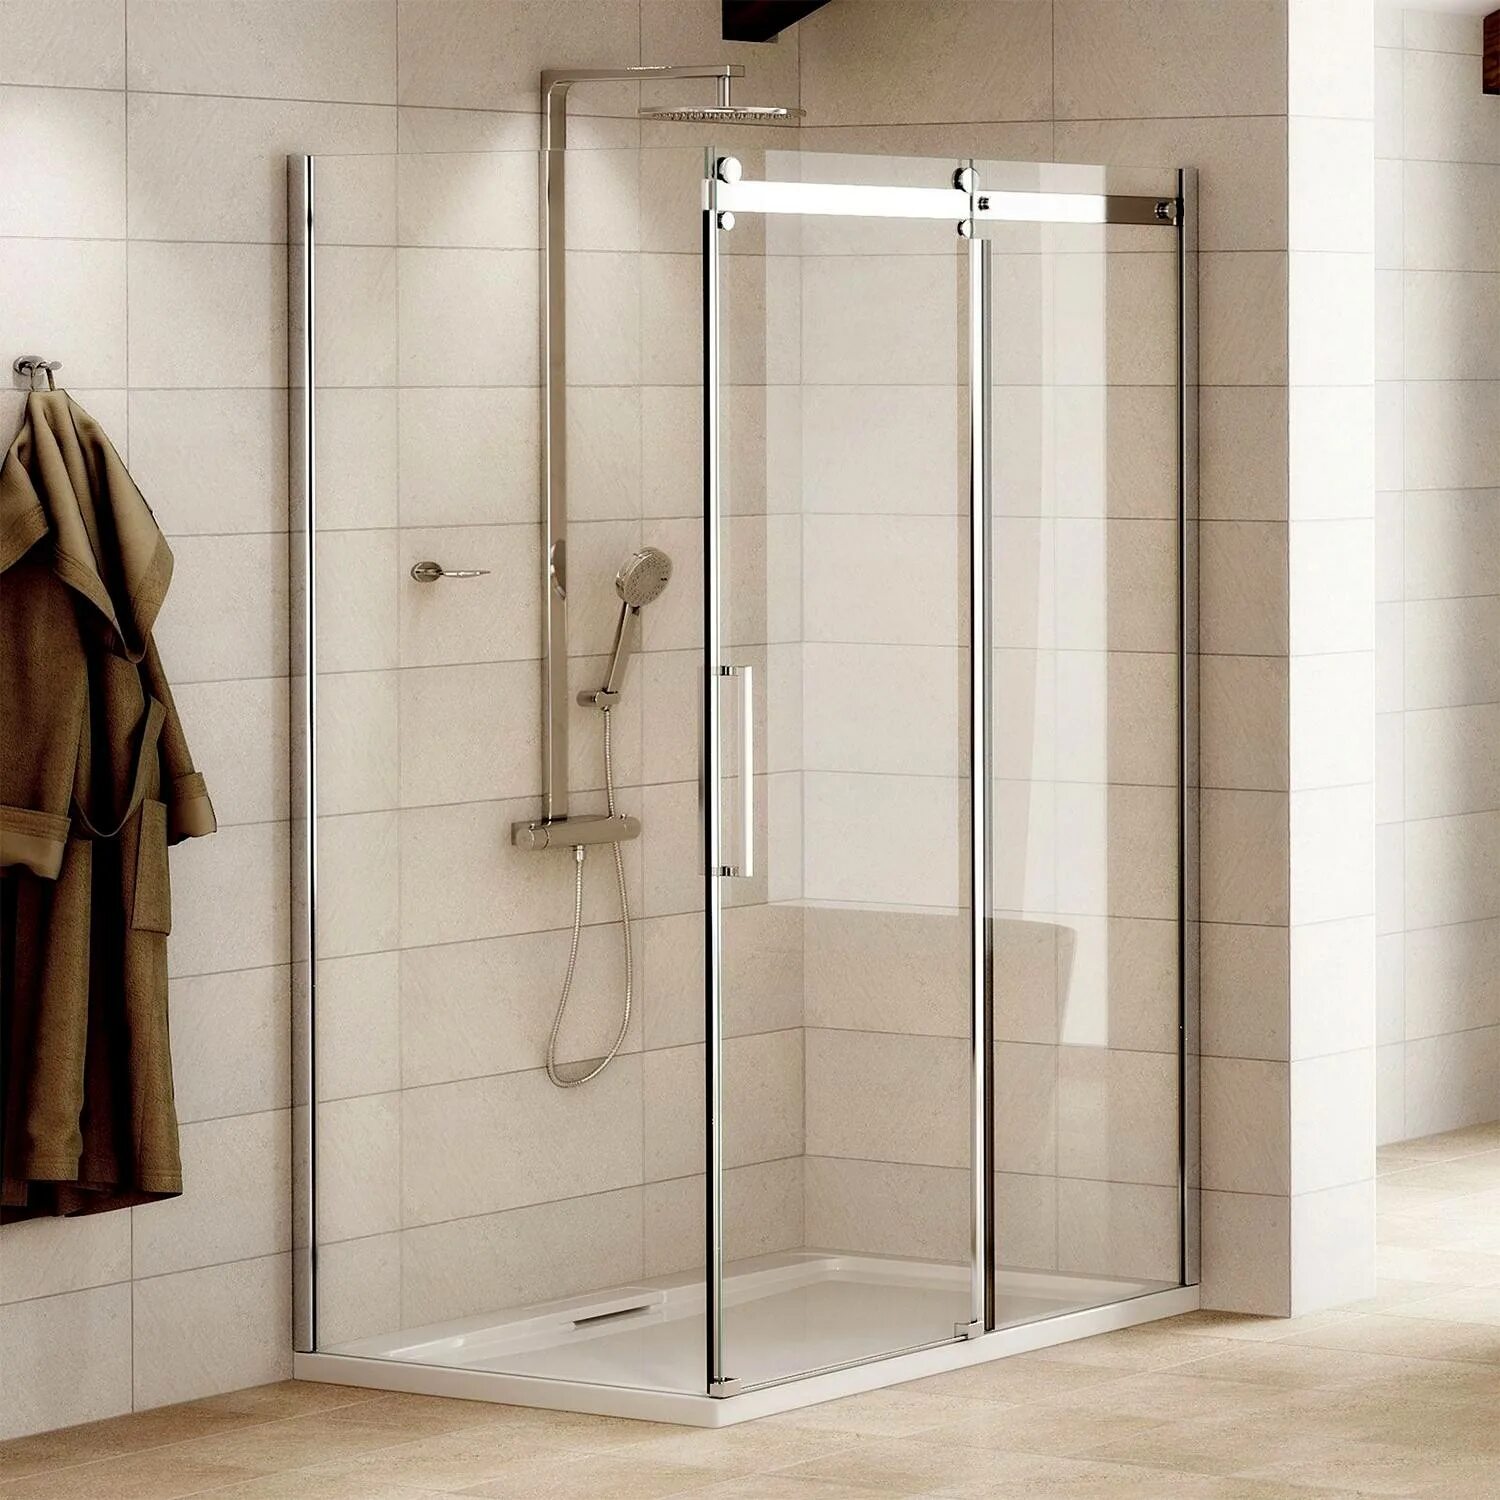 Shower Enclosure Doors. 1200 Shower Room with Glass Sliding Door. Распродажа душевых